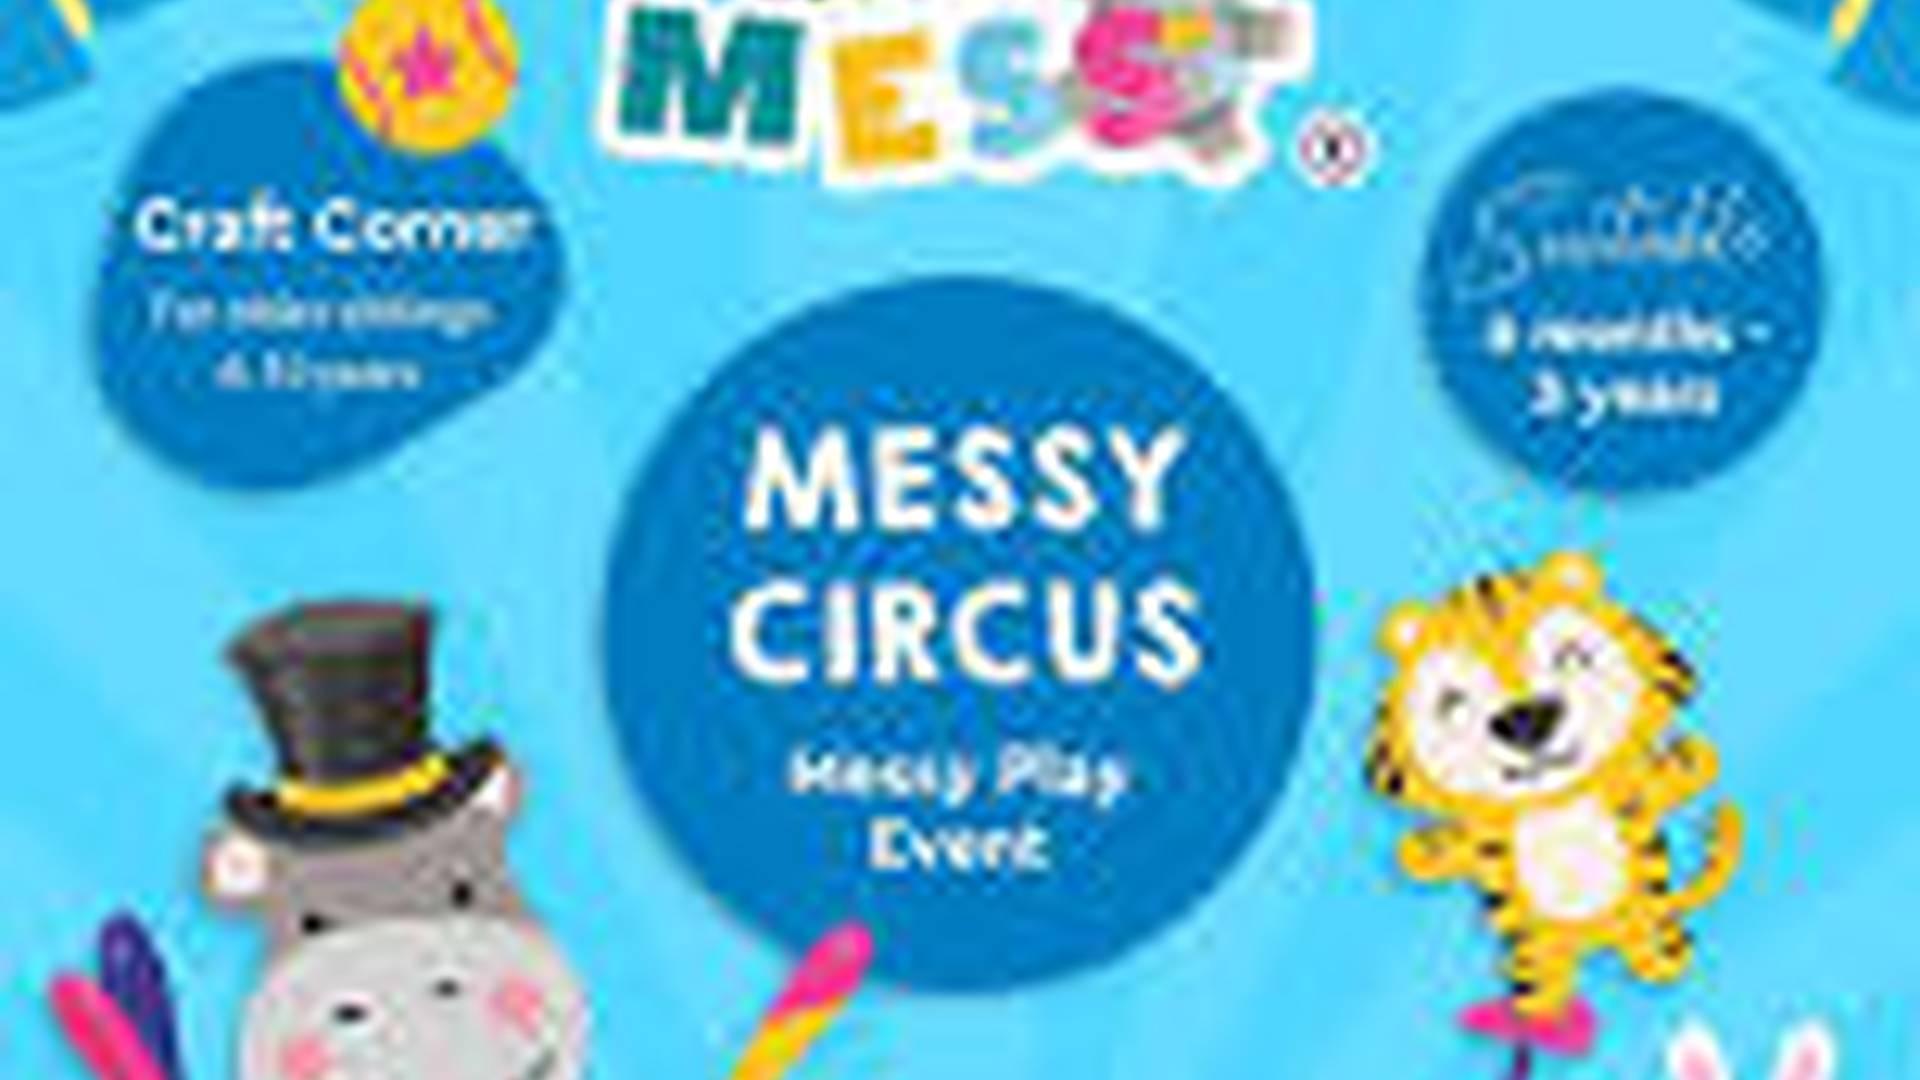 Messy Play - Aylesbury - Messy Circus photo